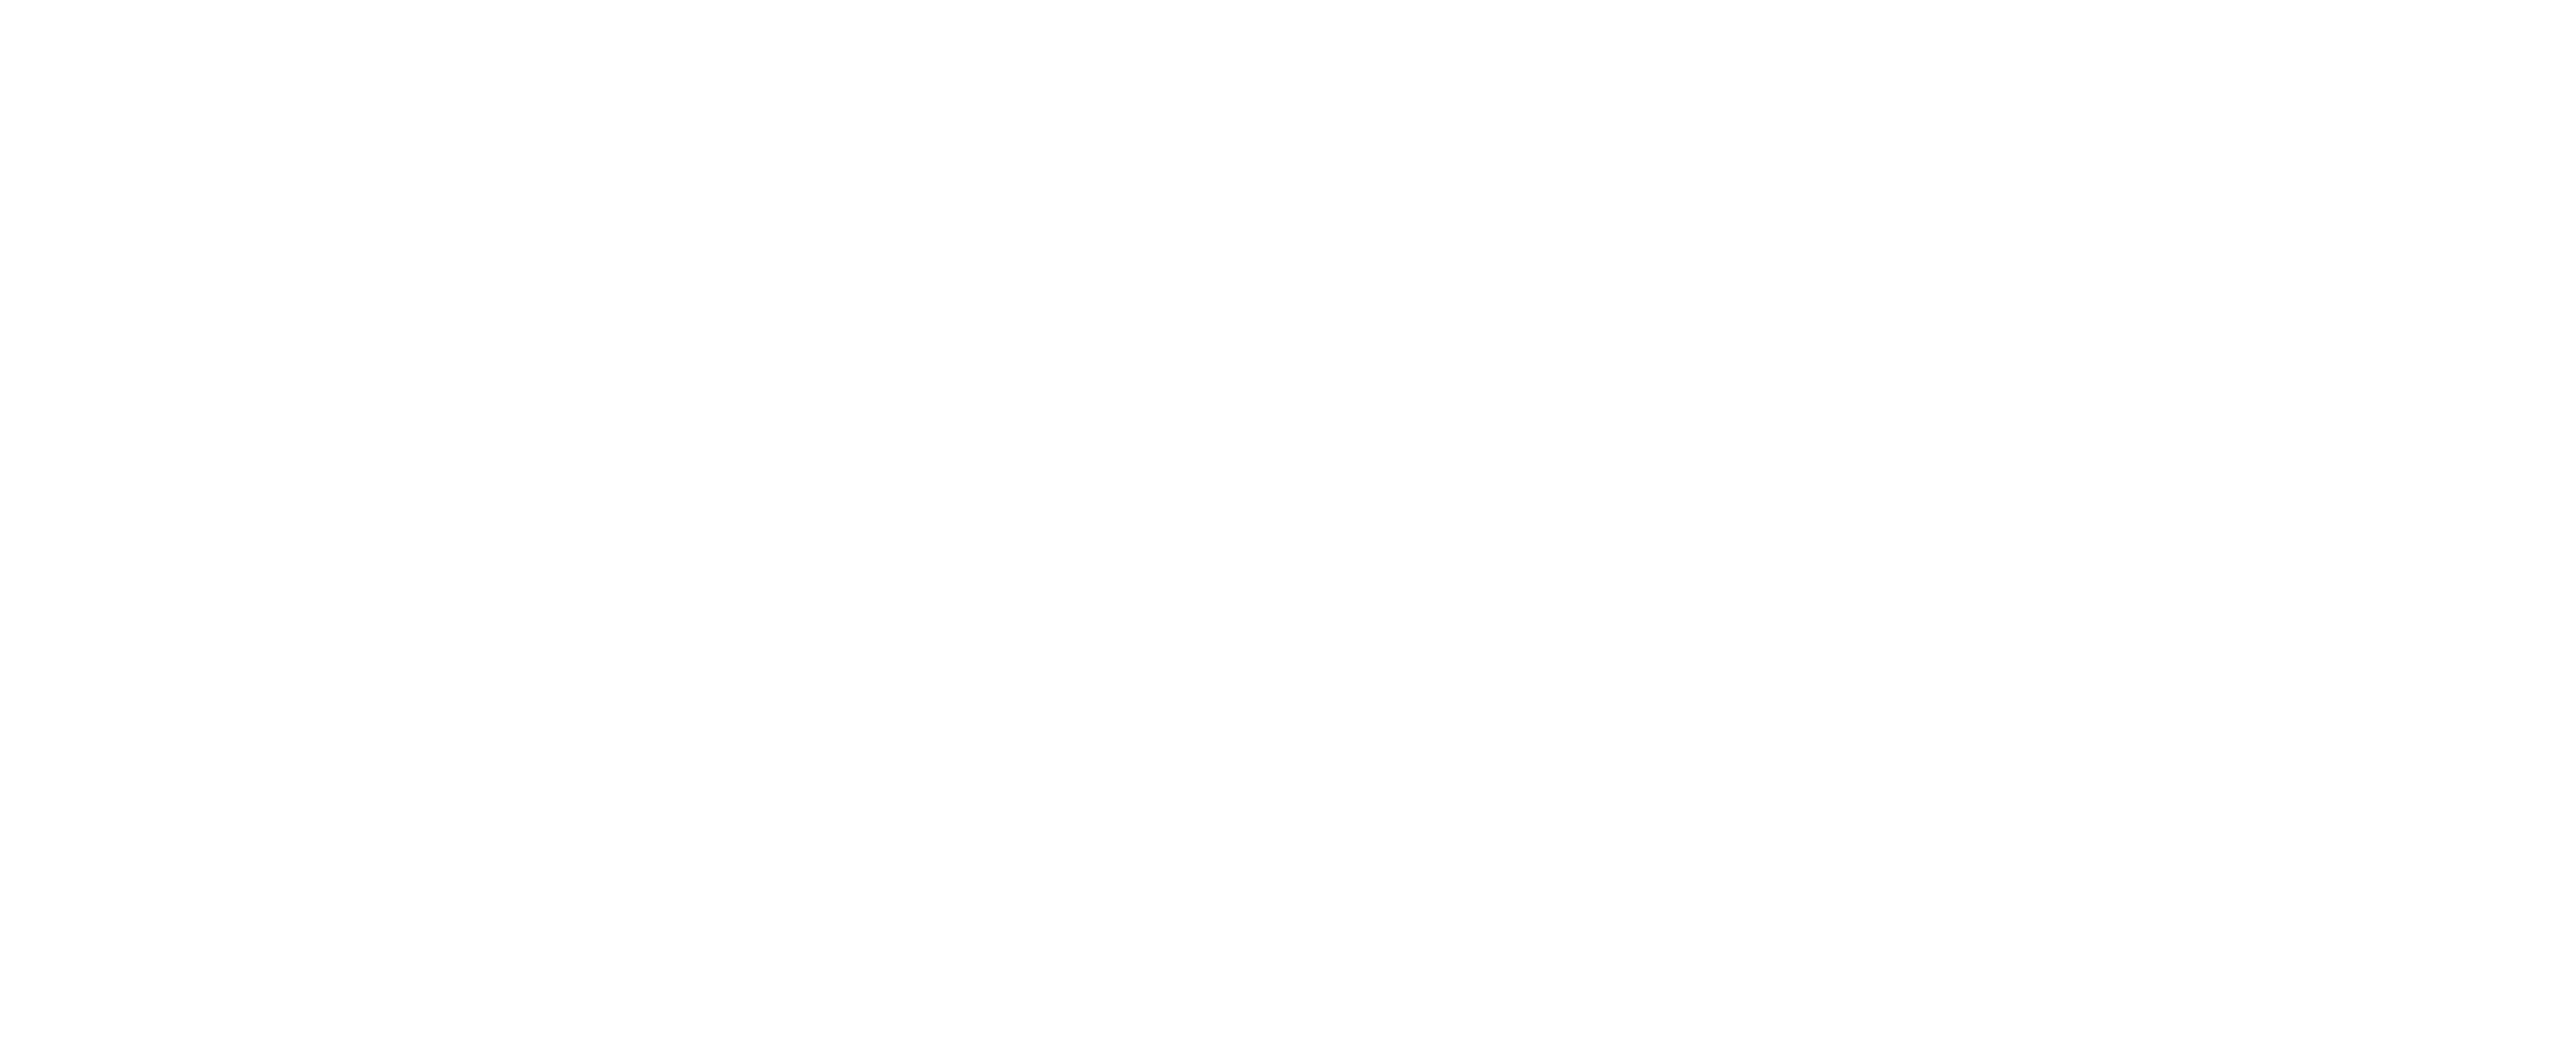 Hotel Fjordgaarden logo